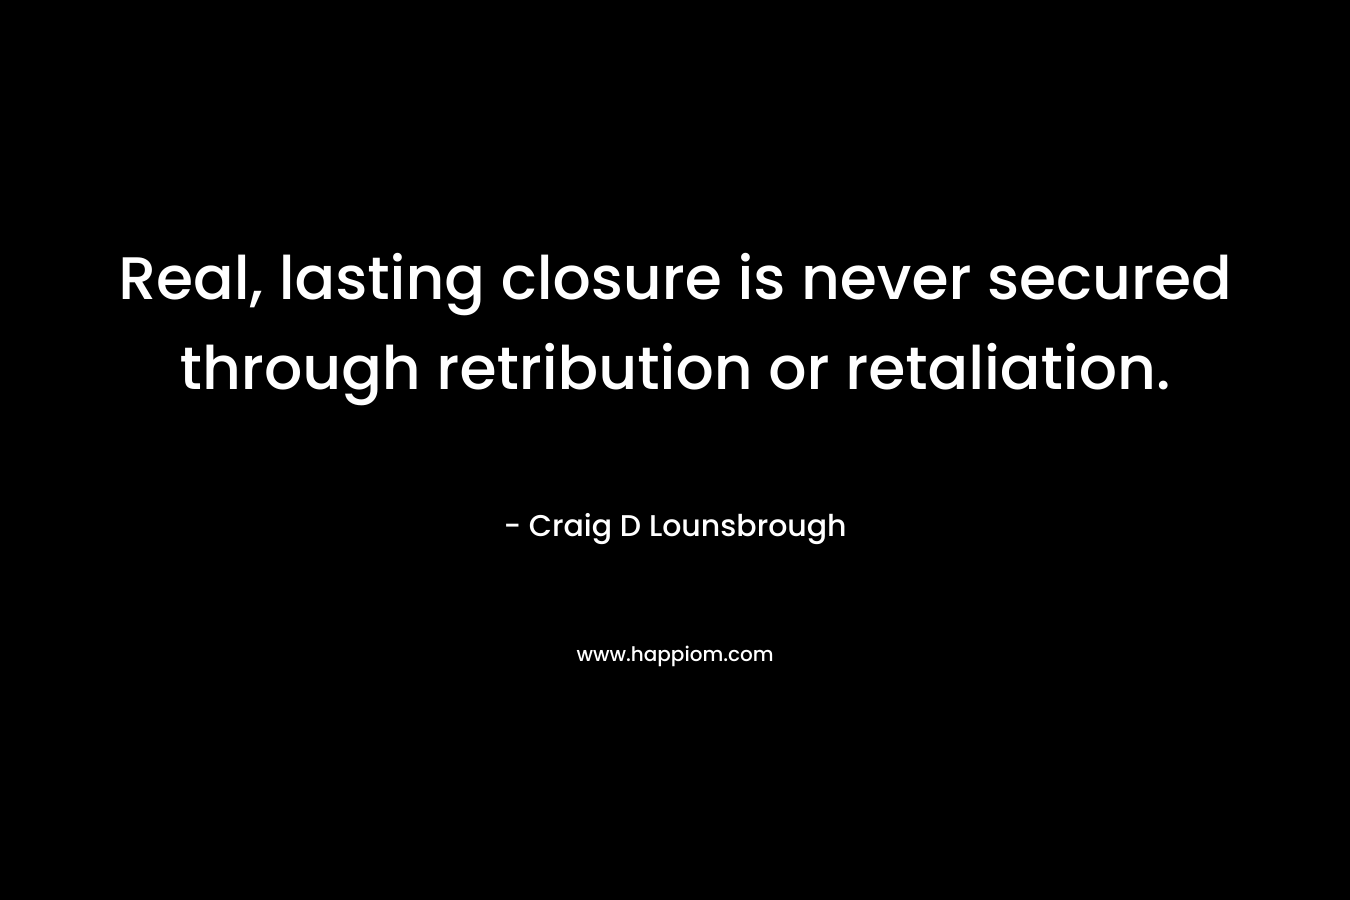 Real, lasting closure is never secured through retribution or retaliation.